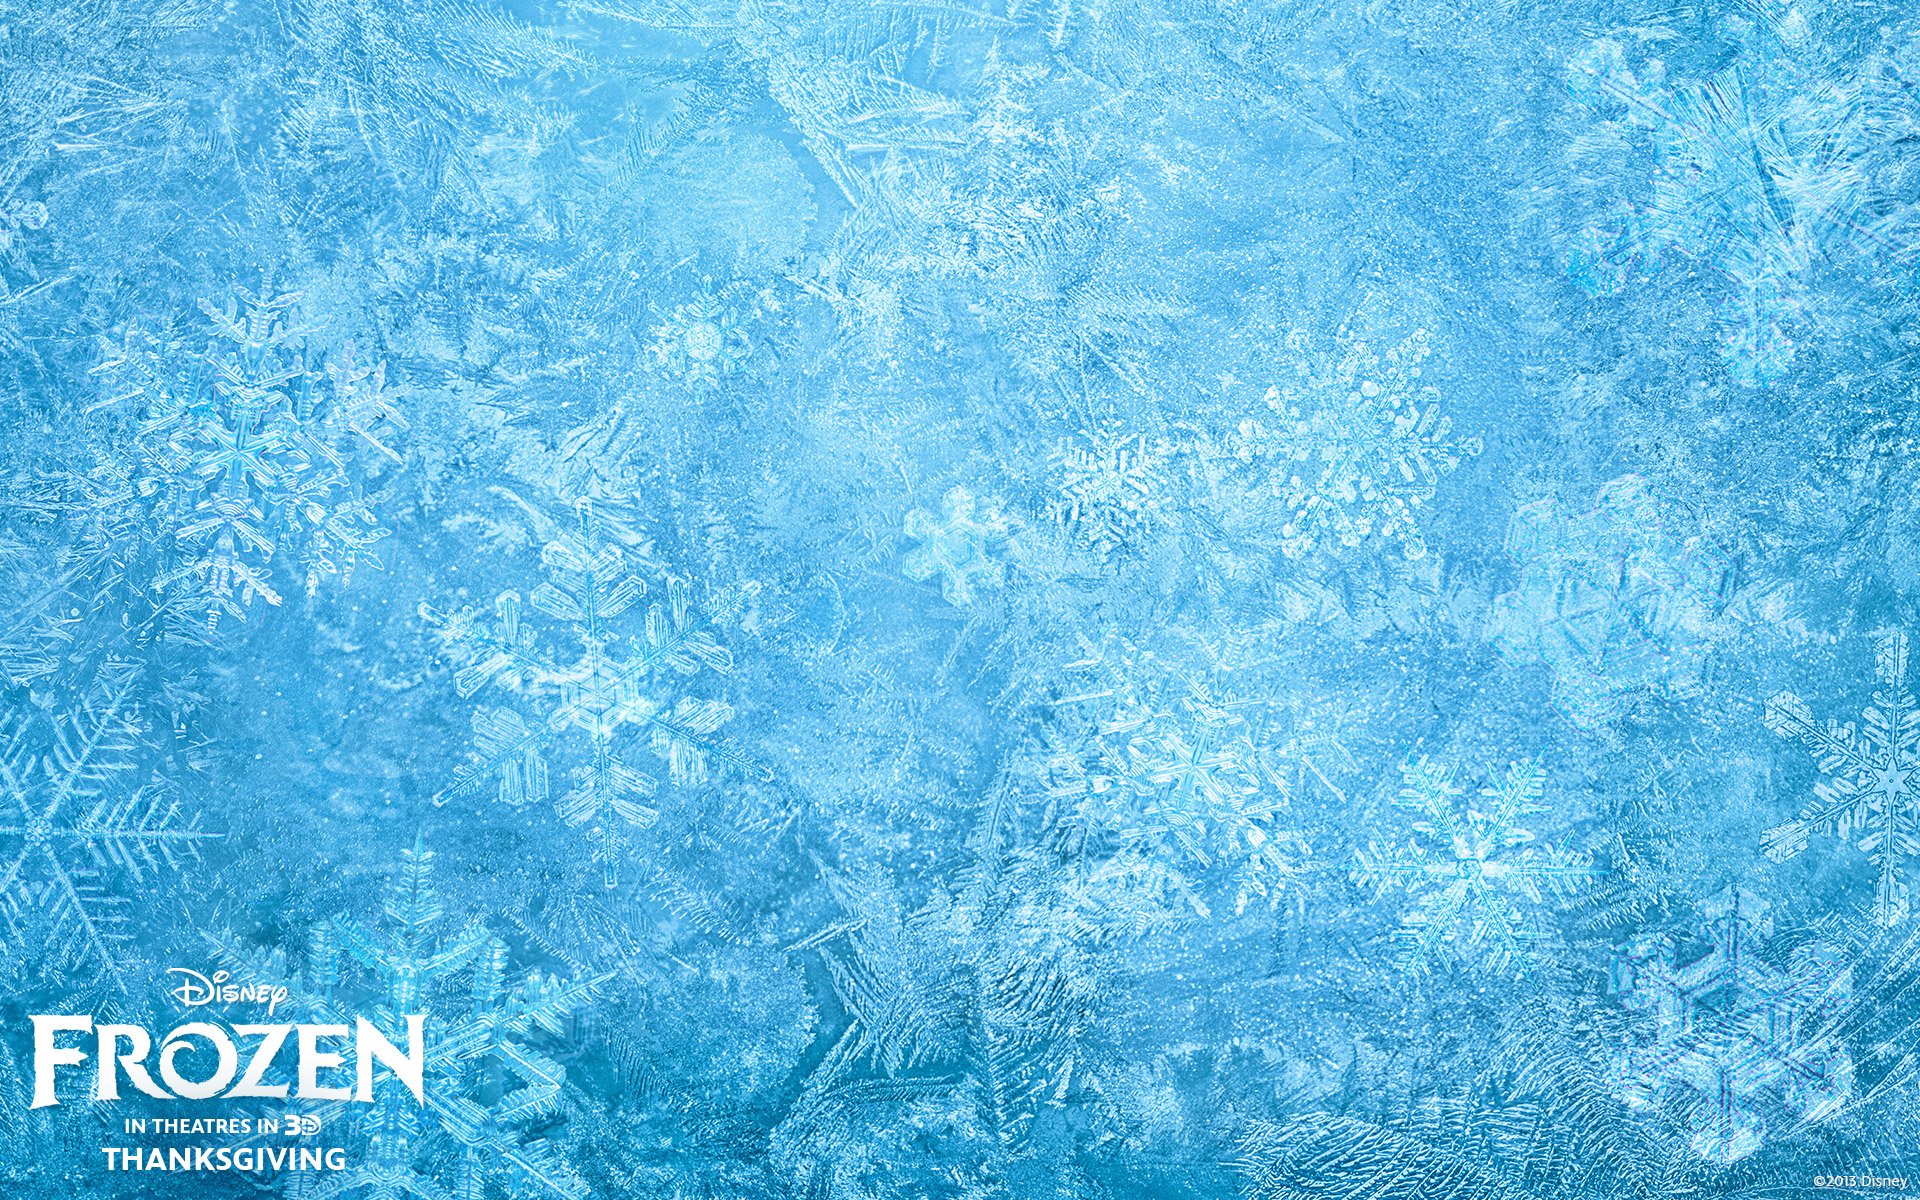  Frozen Disneys Frozen CG animated movie wallpaper image background